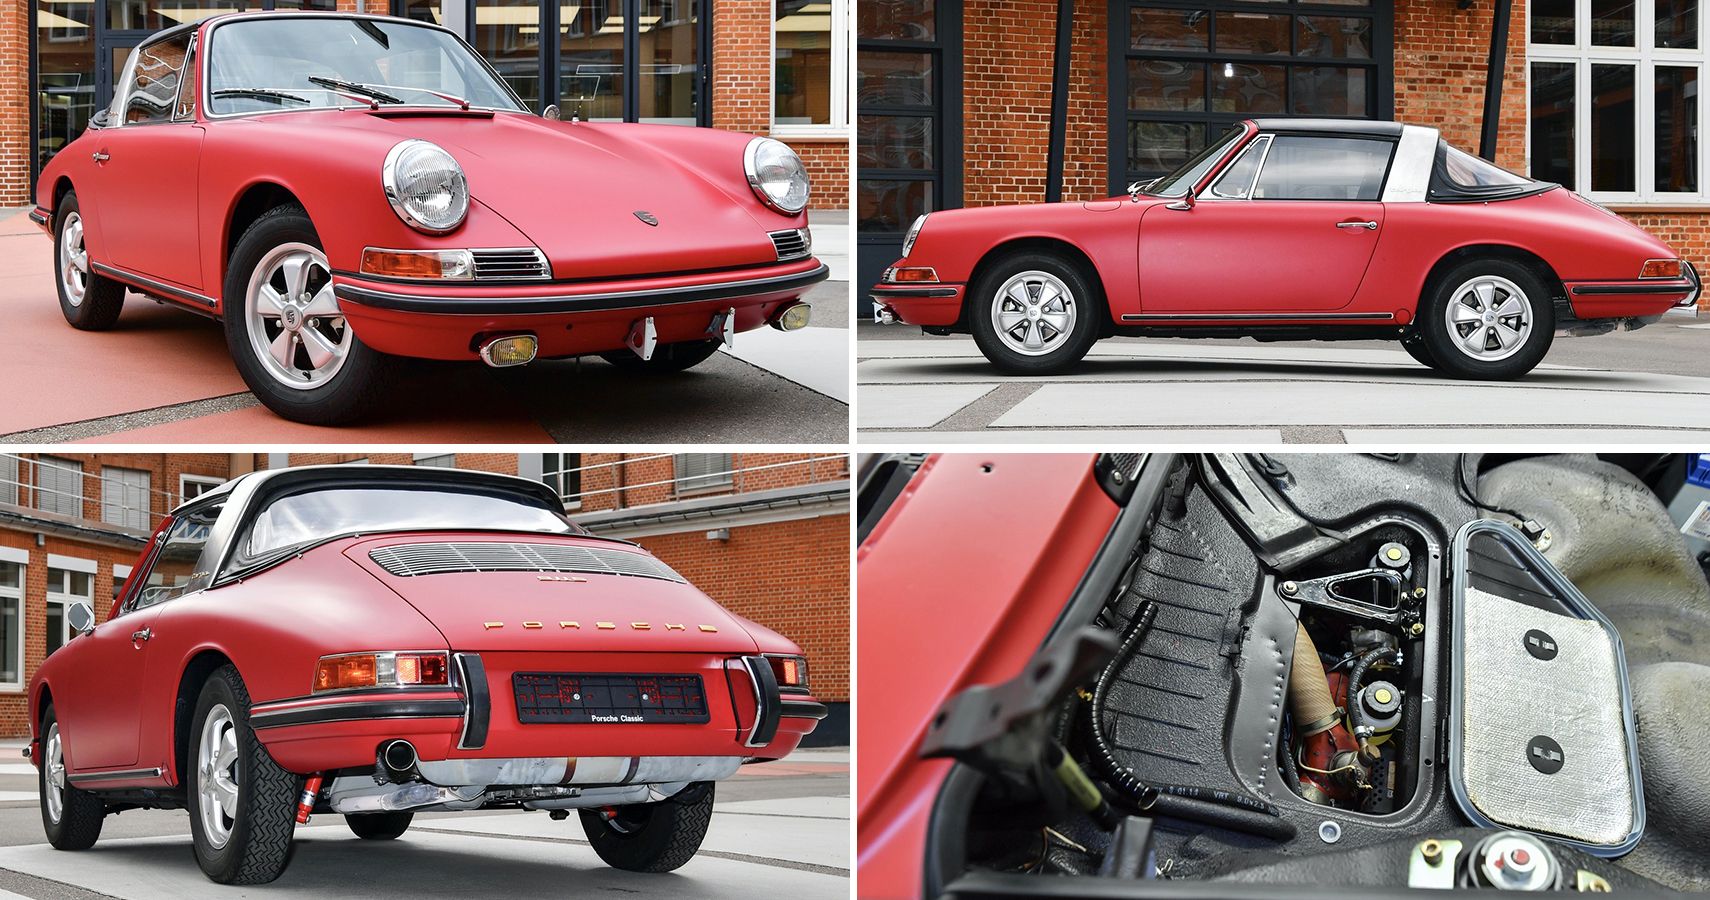 Barn find: 1967 Porsche 911 S Targa restored to factory condition - Drive